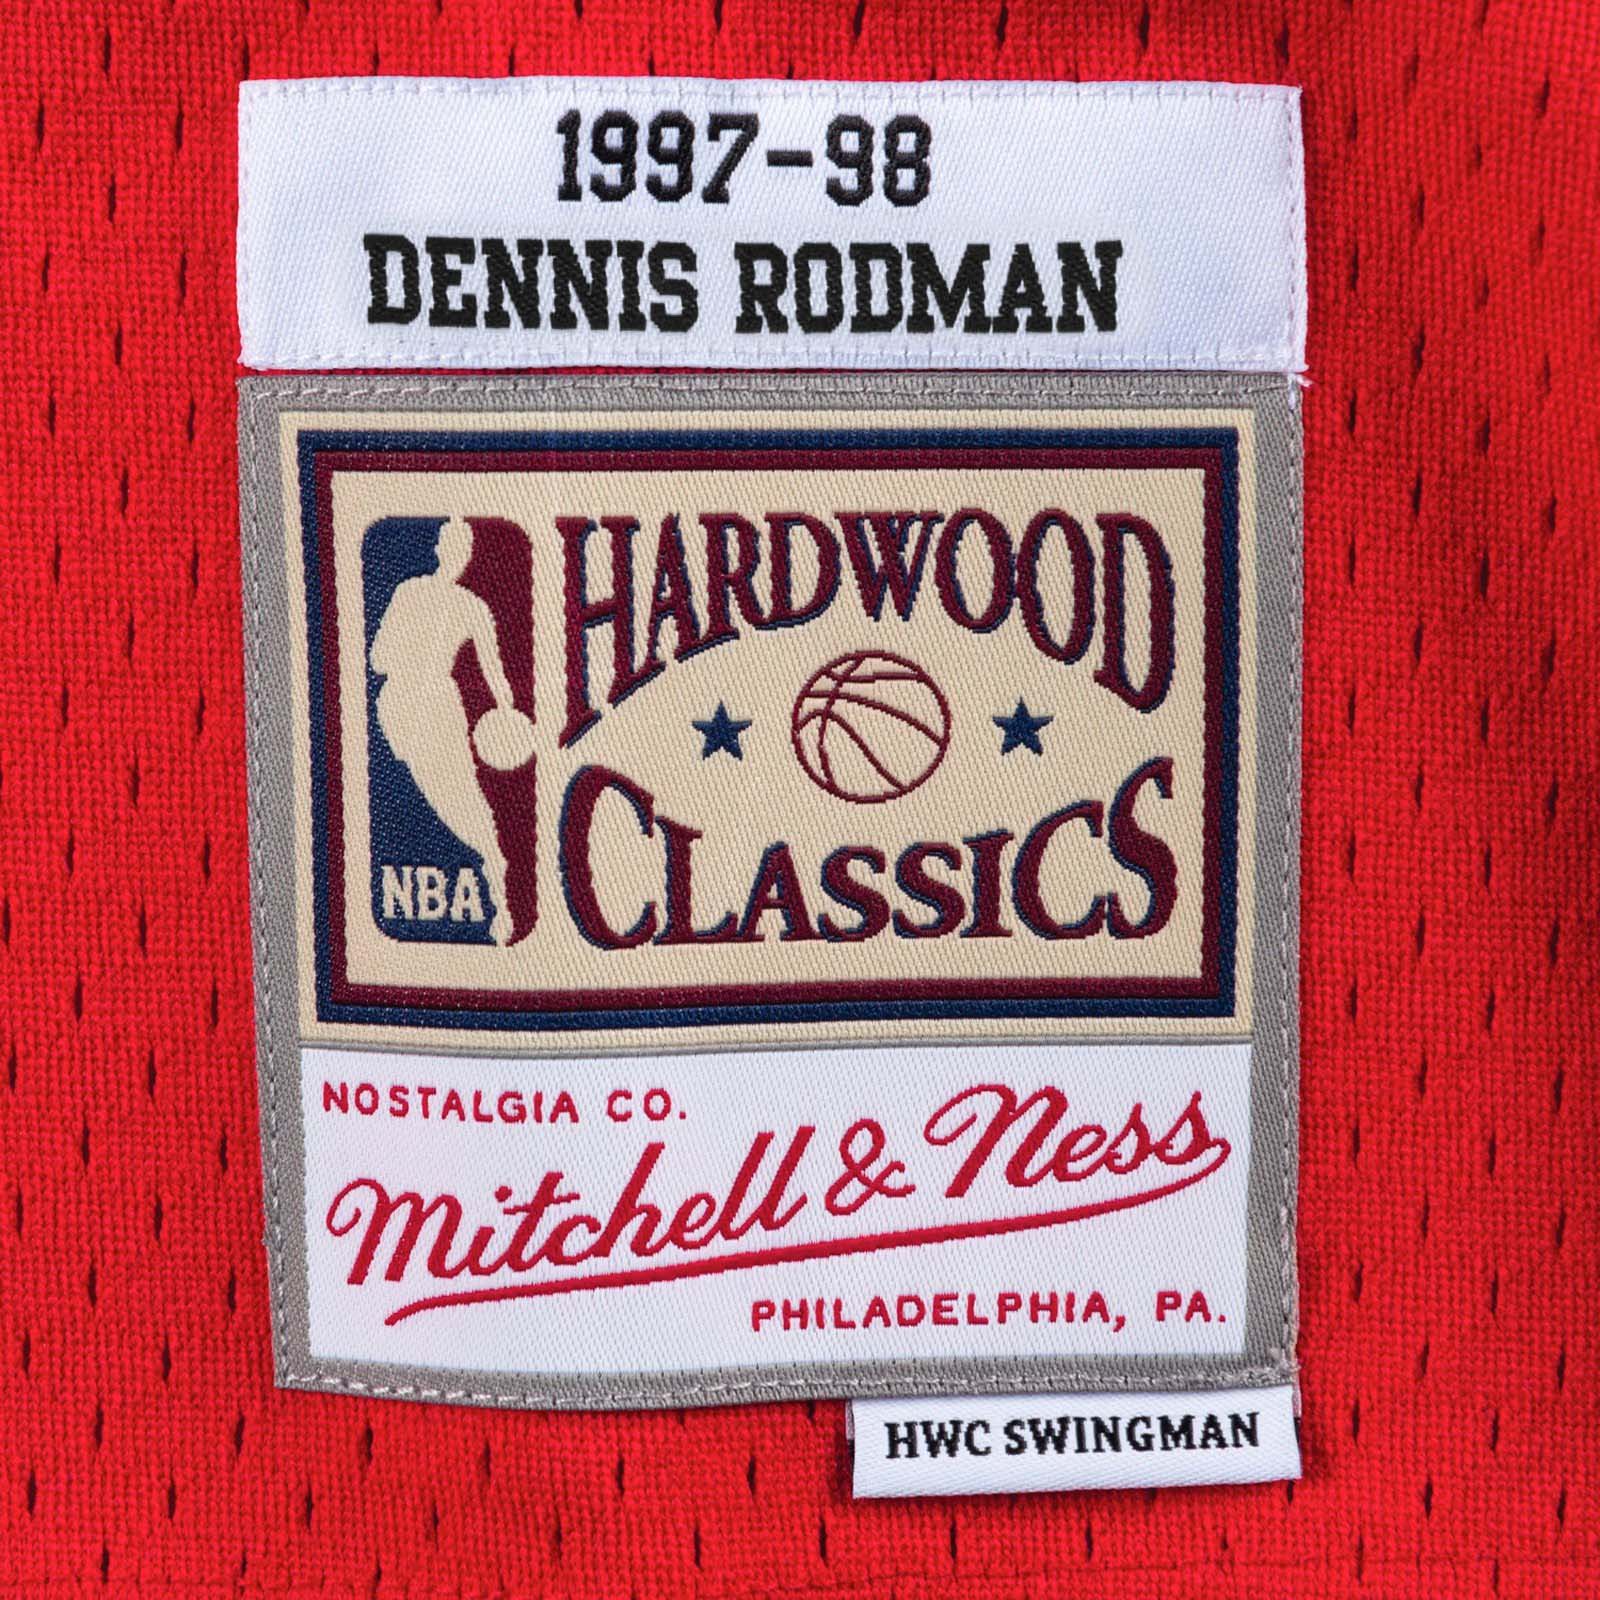 Chicago Bulls 1997-98 Hardwood Classics Throwback Swingman NBA Shorts